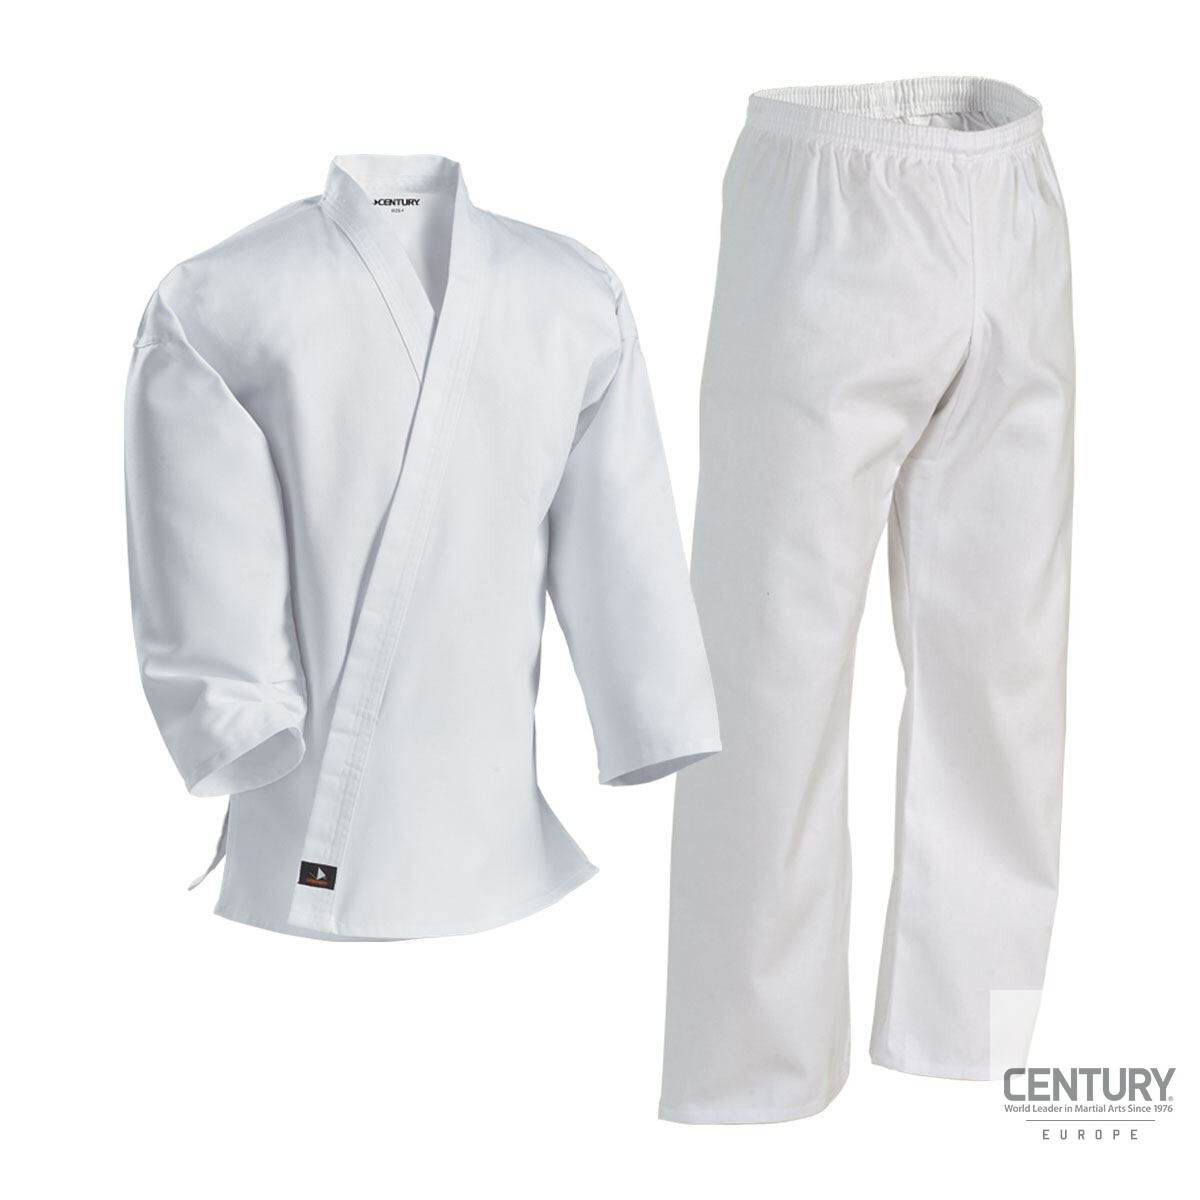 Lightweight Student Uniform 6 oz White [2] 142 - 155 cm